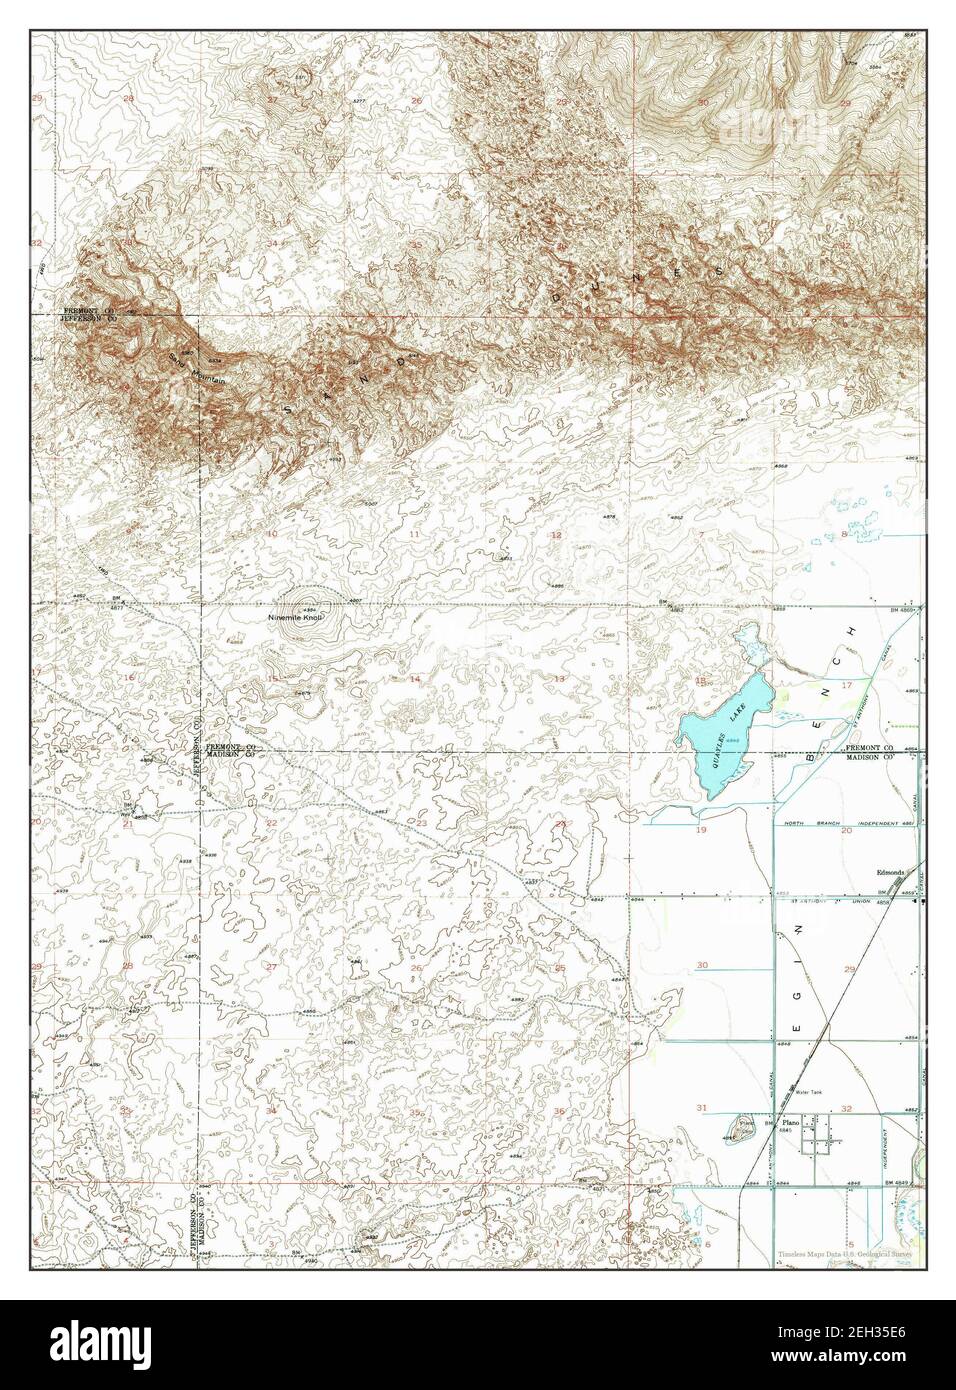 Plano, Idaho, map 1951, 1:24000, United States of America by Timeless Maps, data U.S. Geological Survey Stock Photo